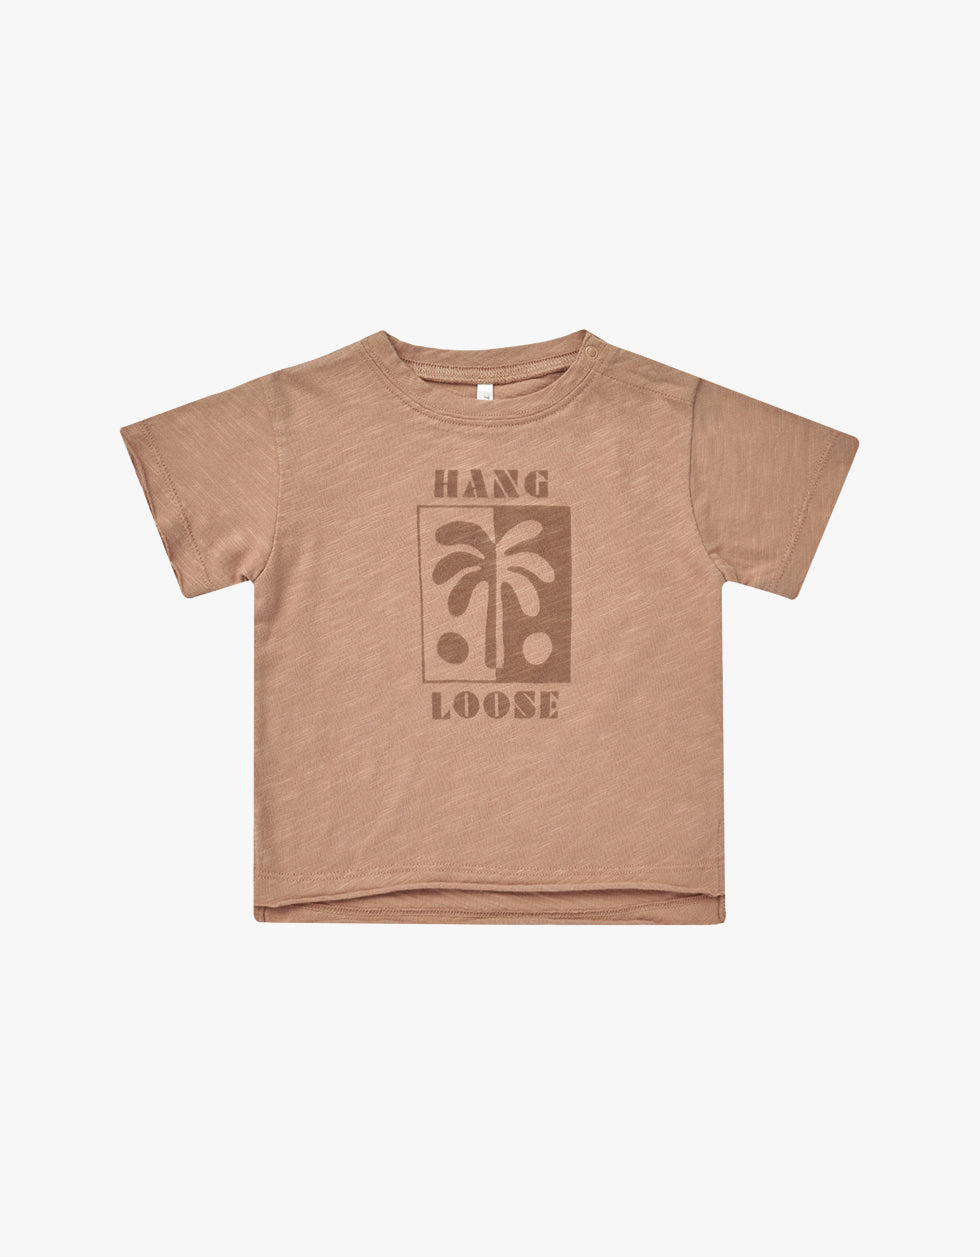 T-shirt | Hang loose